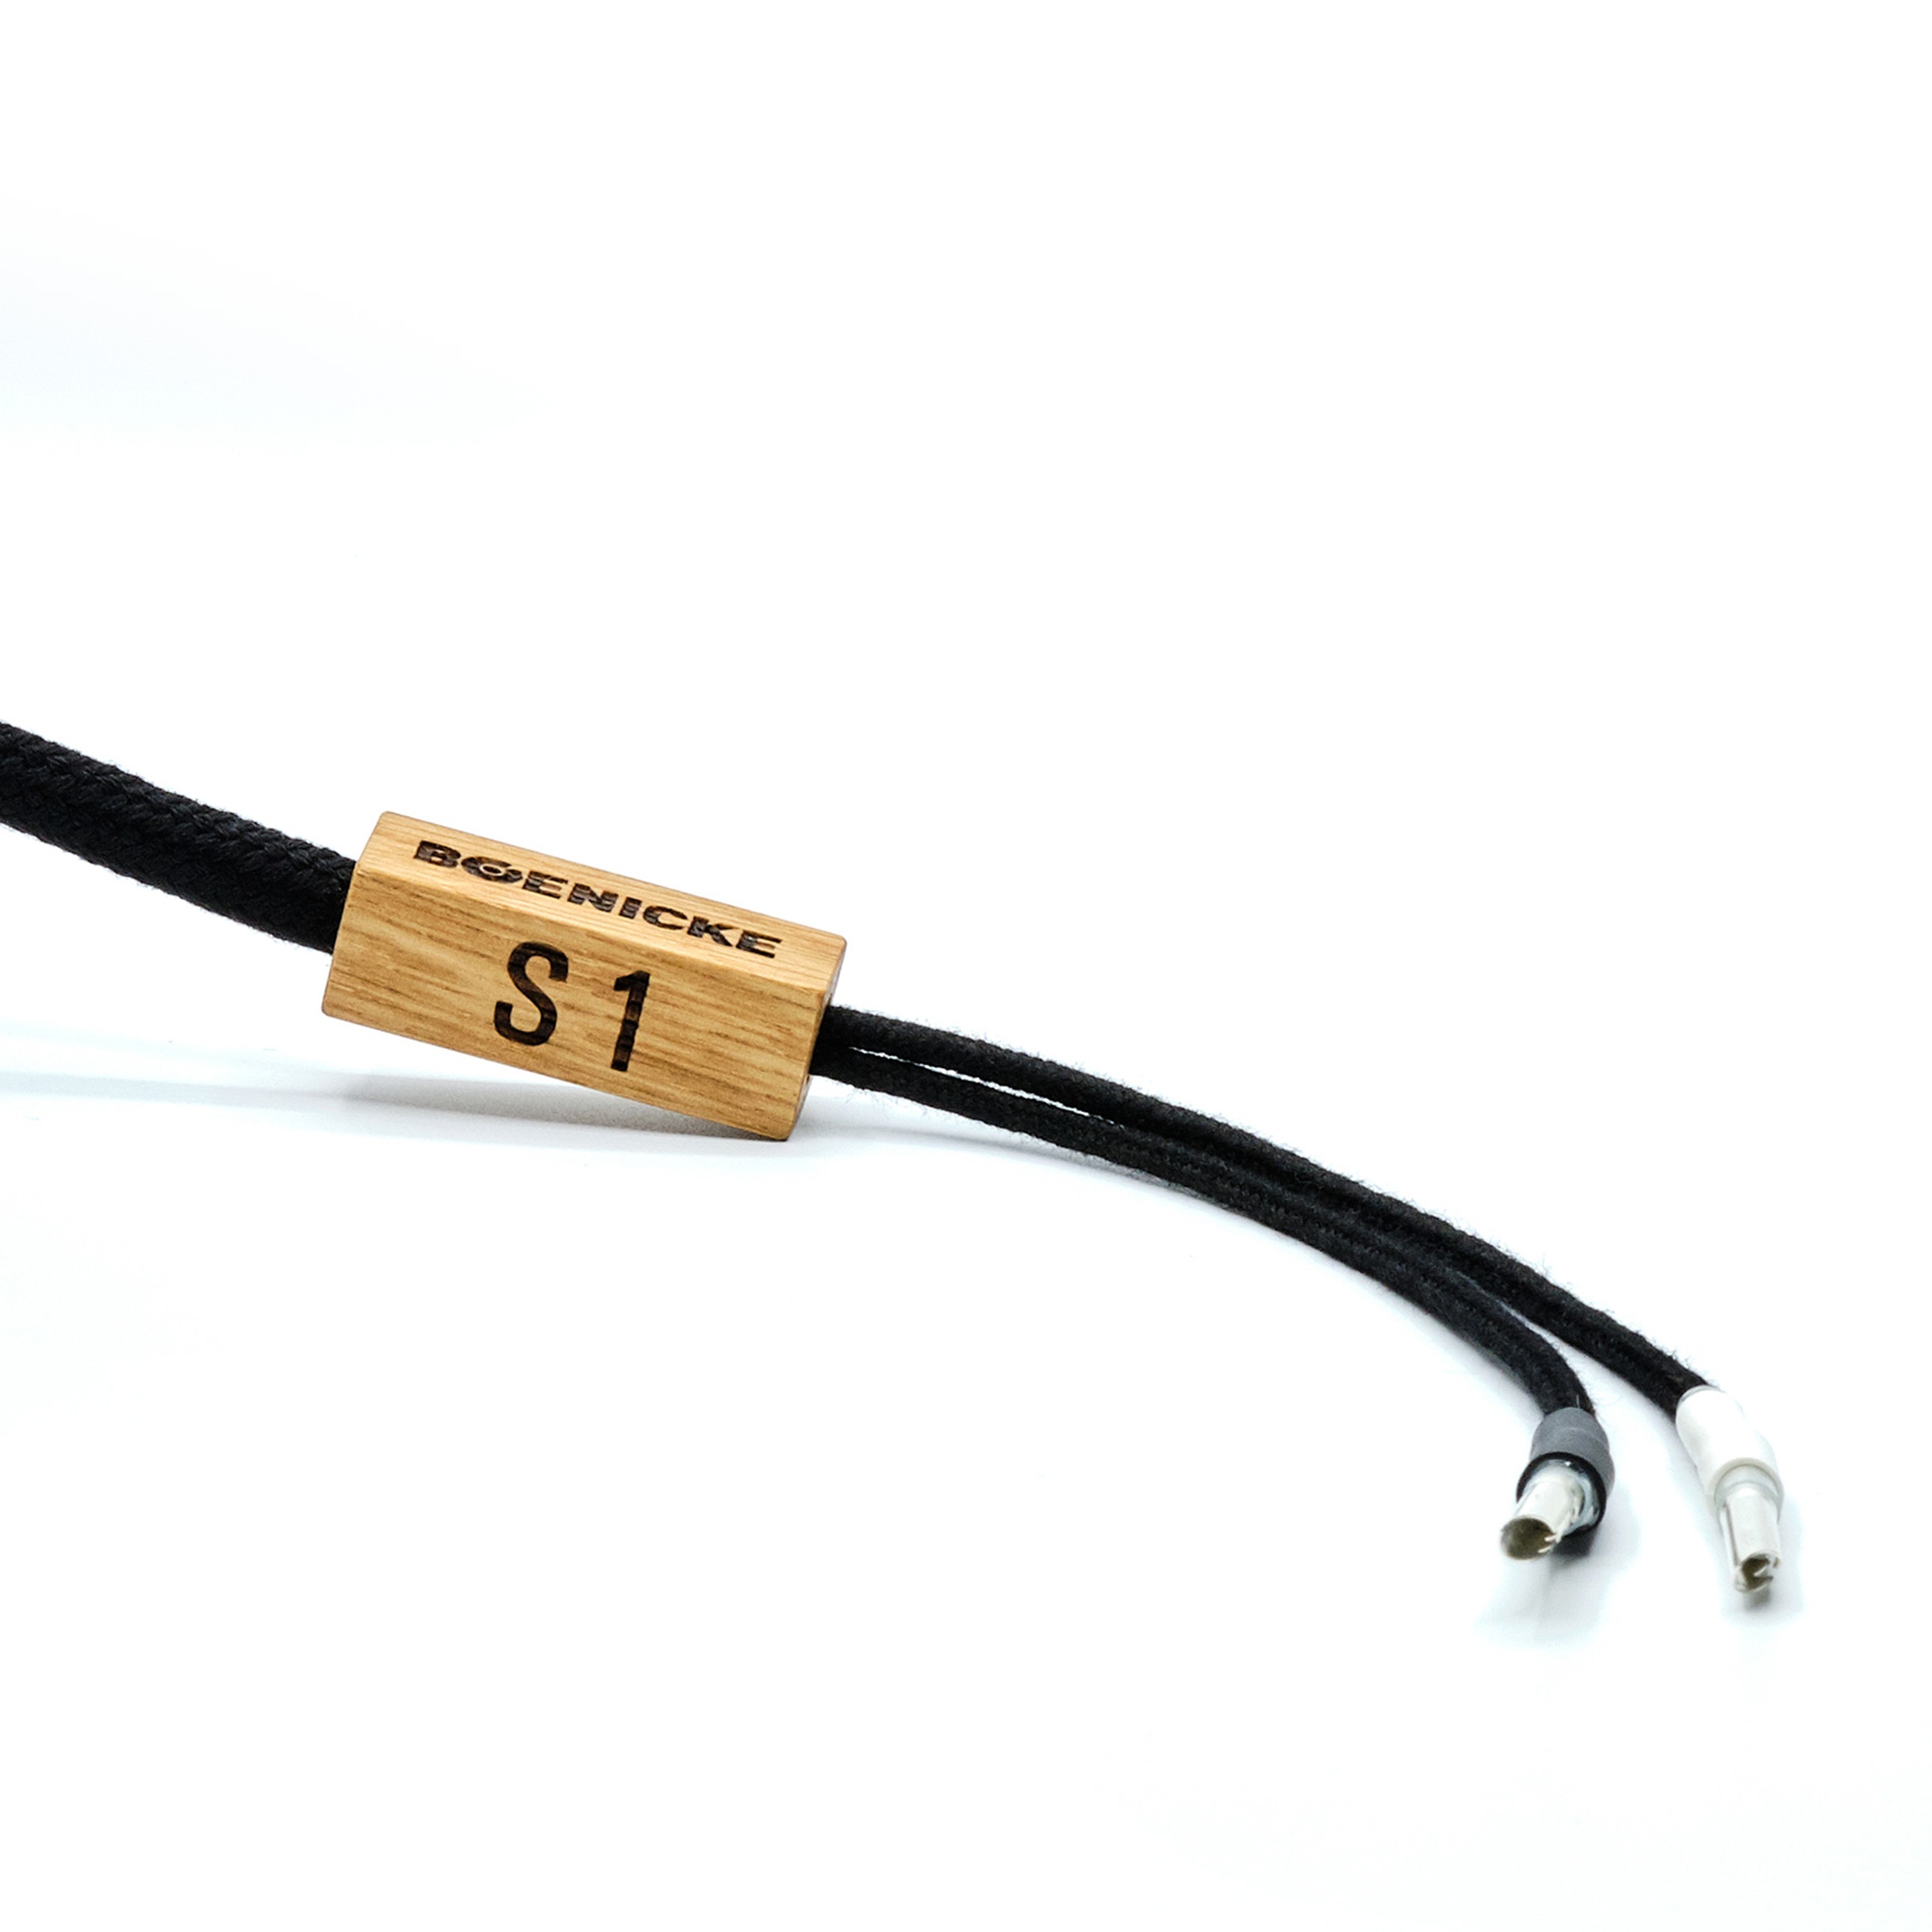 Boenicke S1 speaker kabel